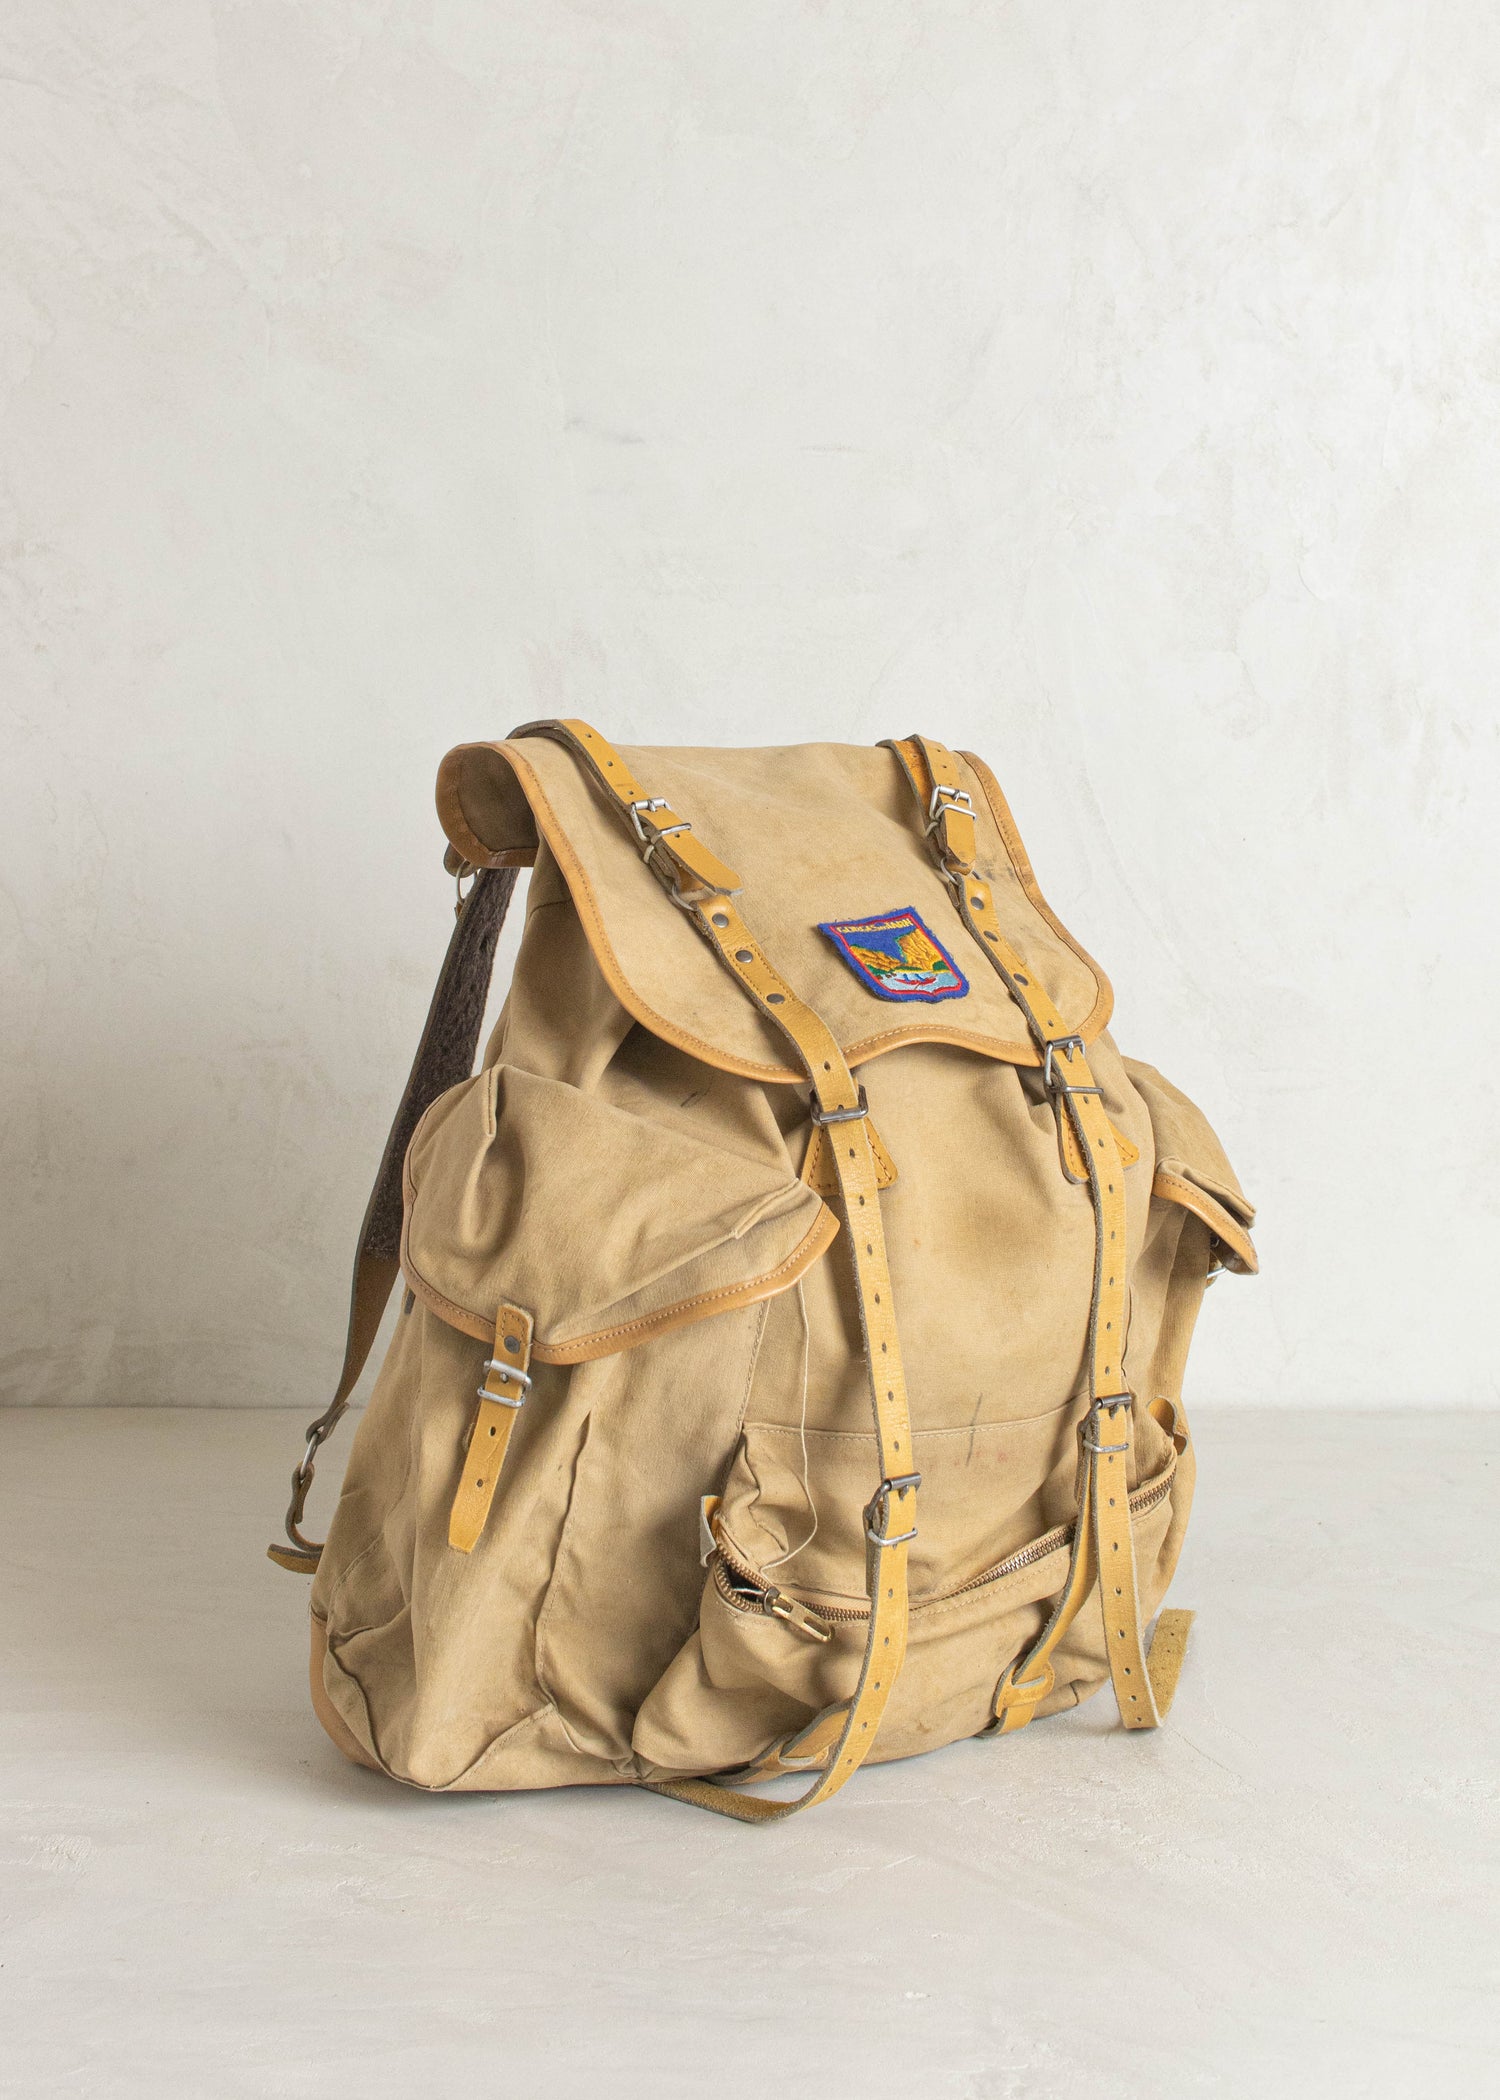 Lafuma Tashila 40 Backpack | eBay